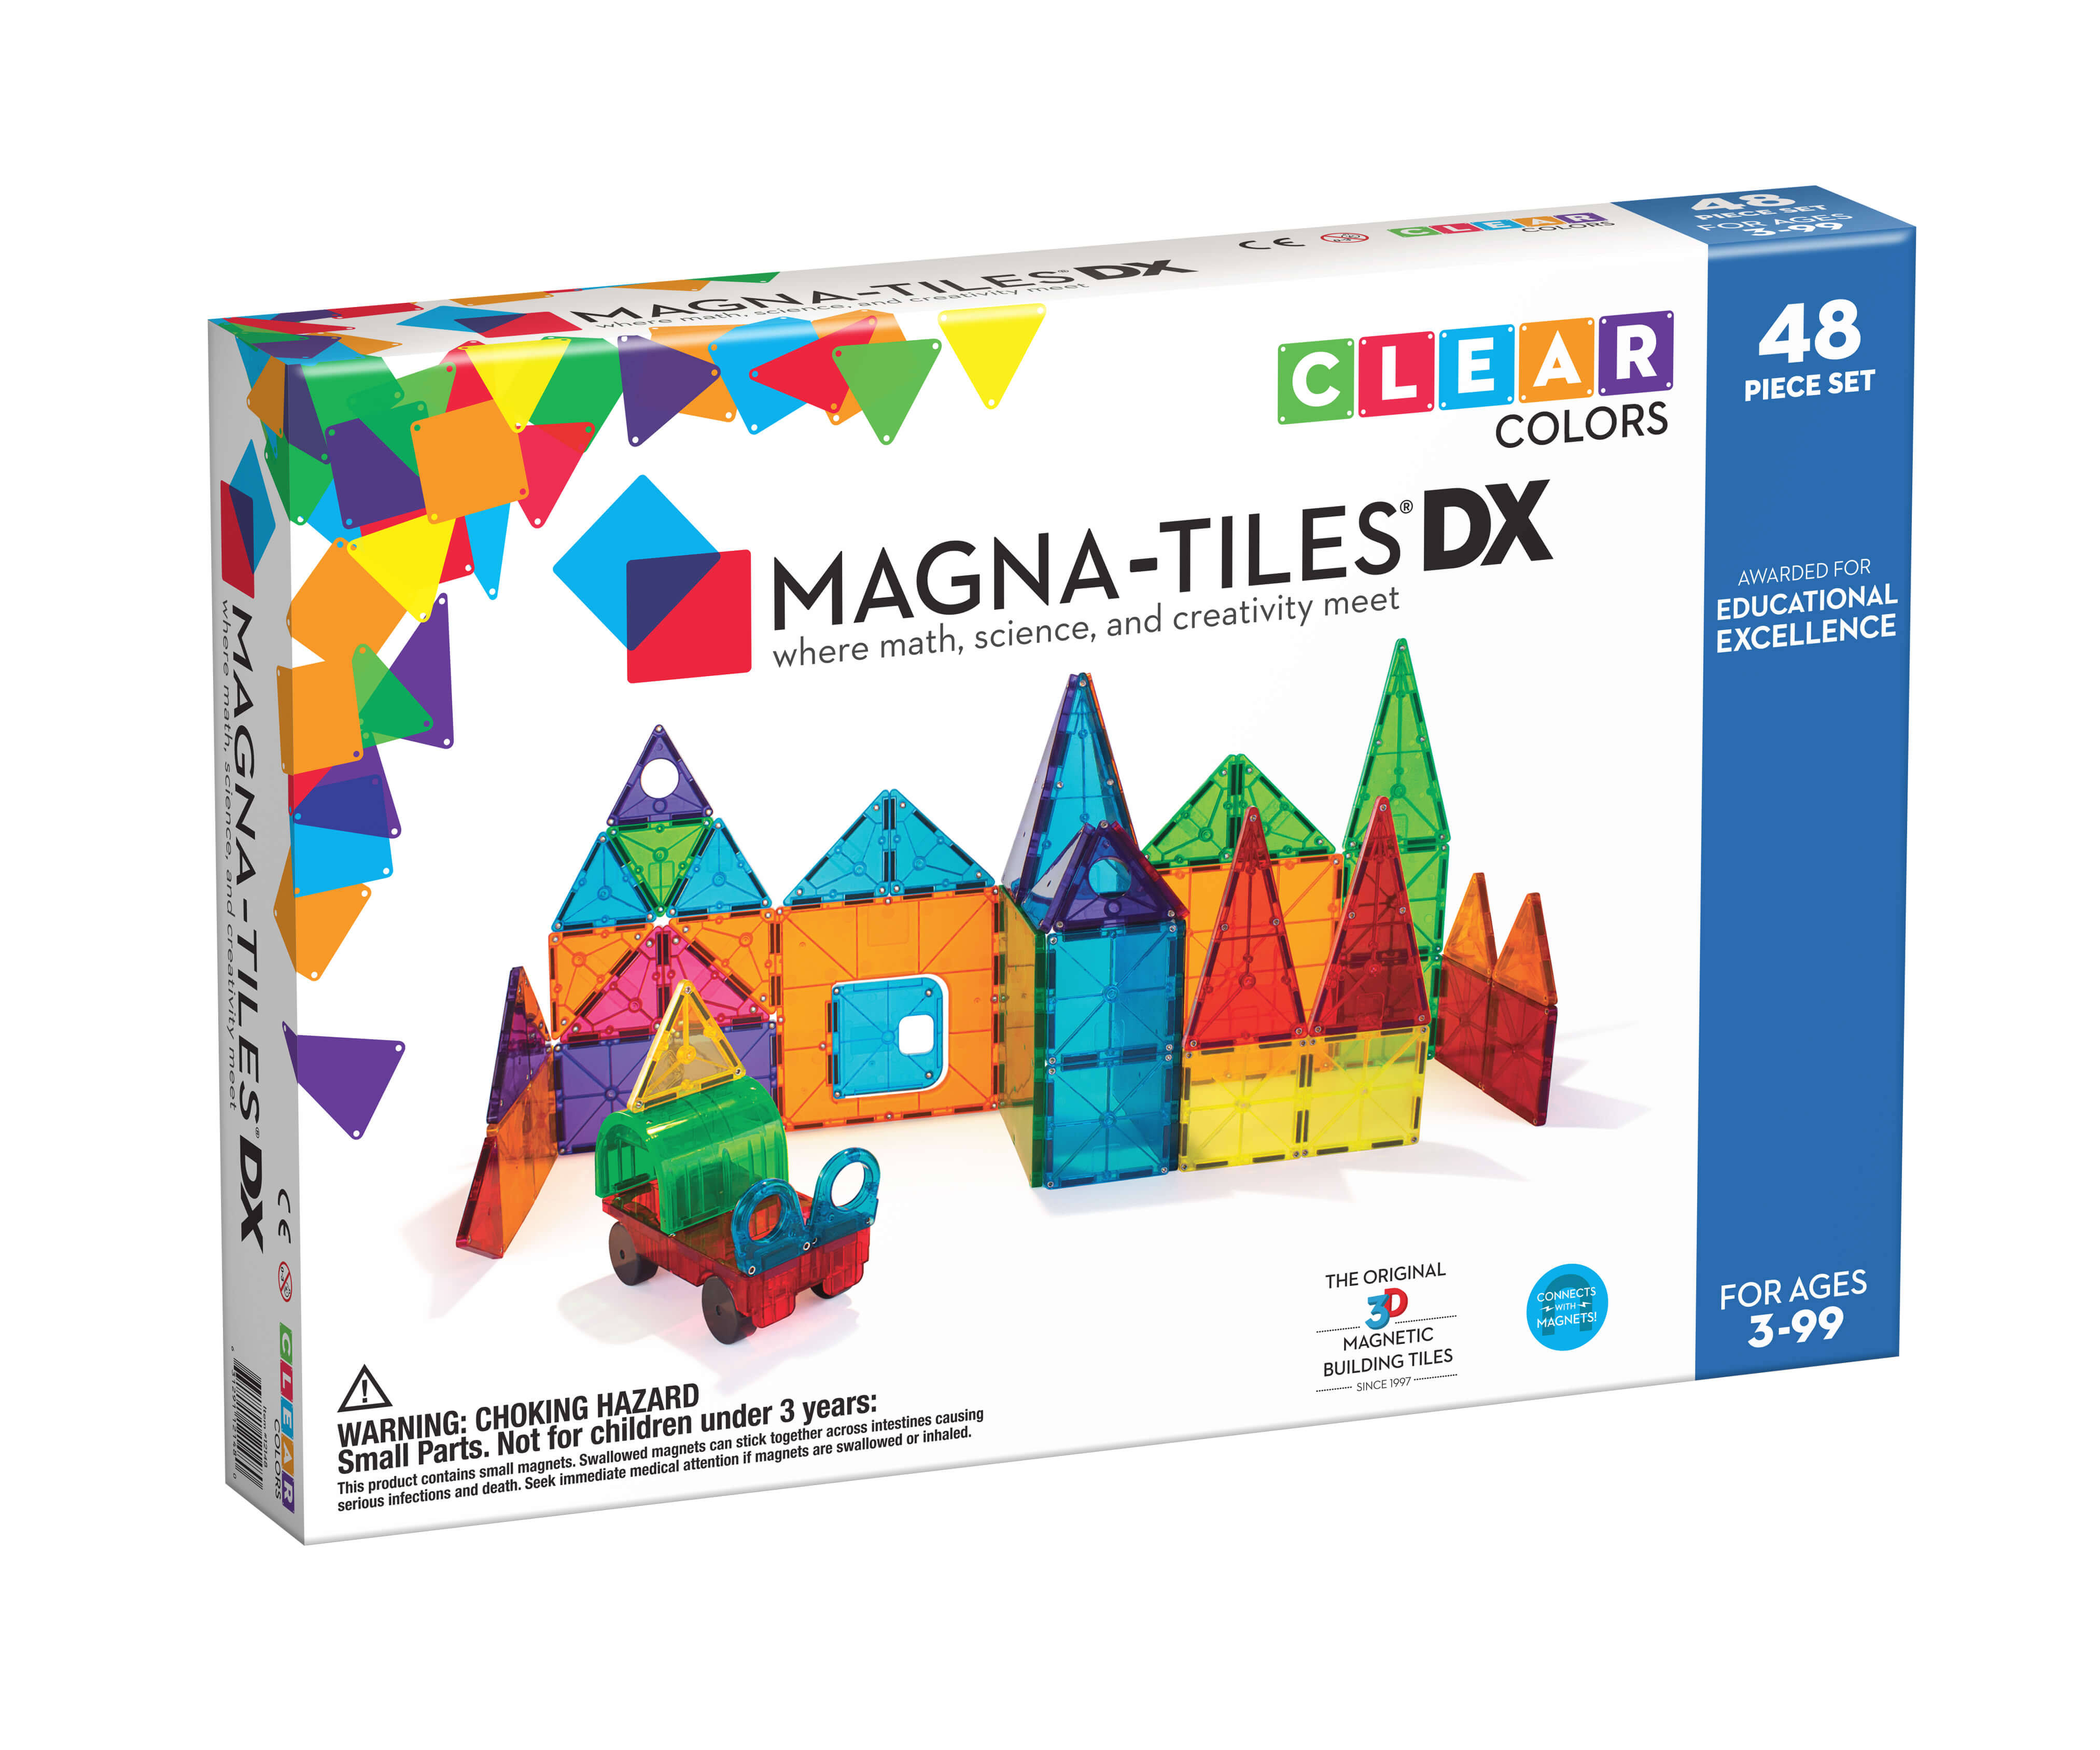 Magna-Tiles 48-Piece Clear Colors Deluxe Set, The Original, Award-Winn